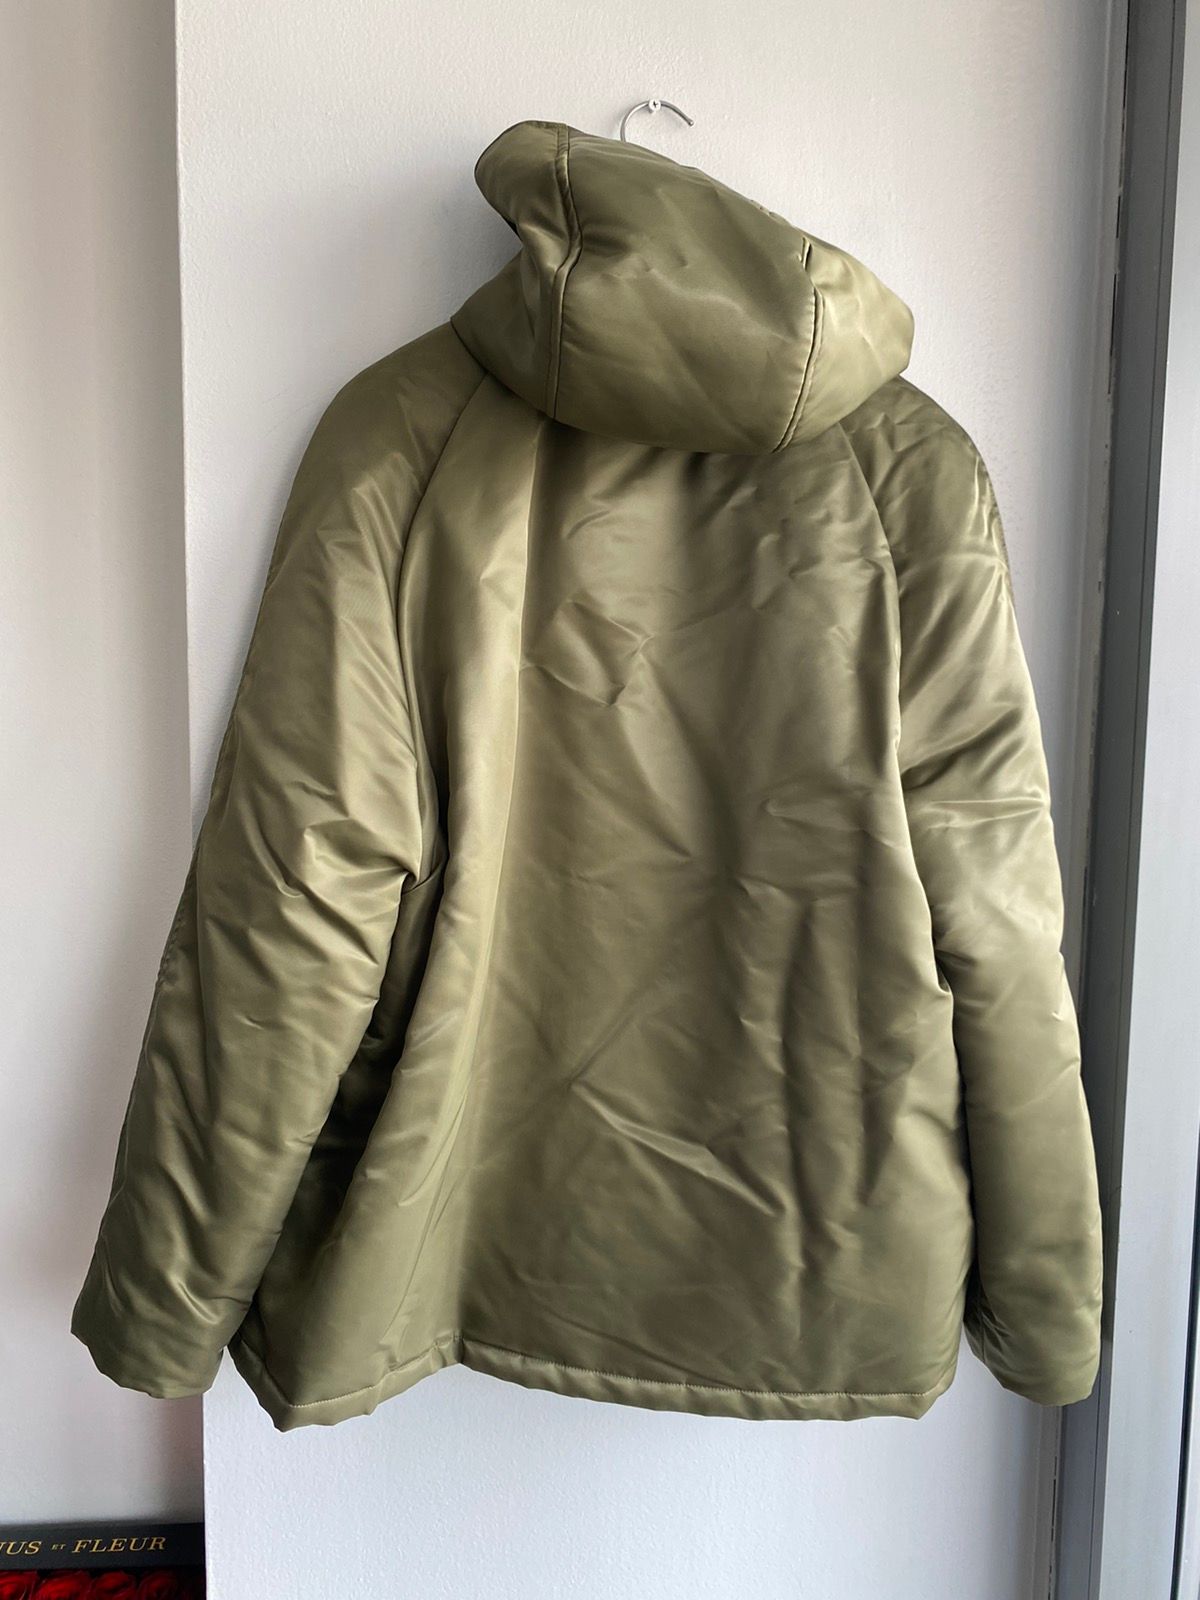 FW16 Palladium NEW Army Green Puffer Jacket EU54 $2890